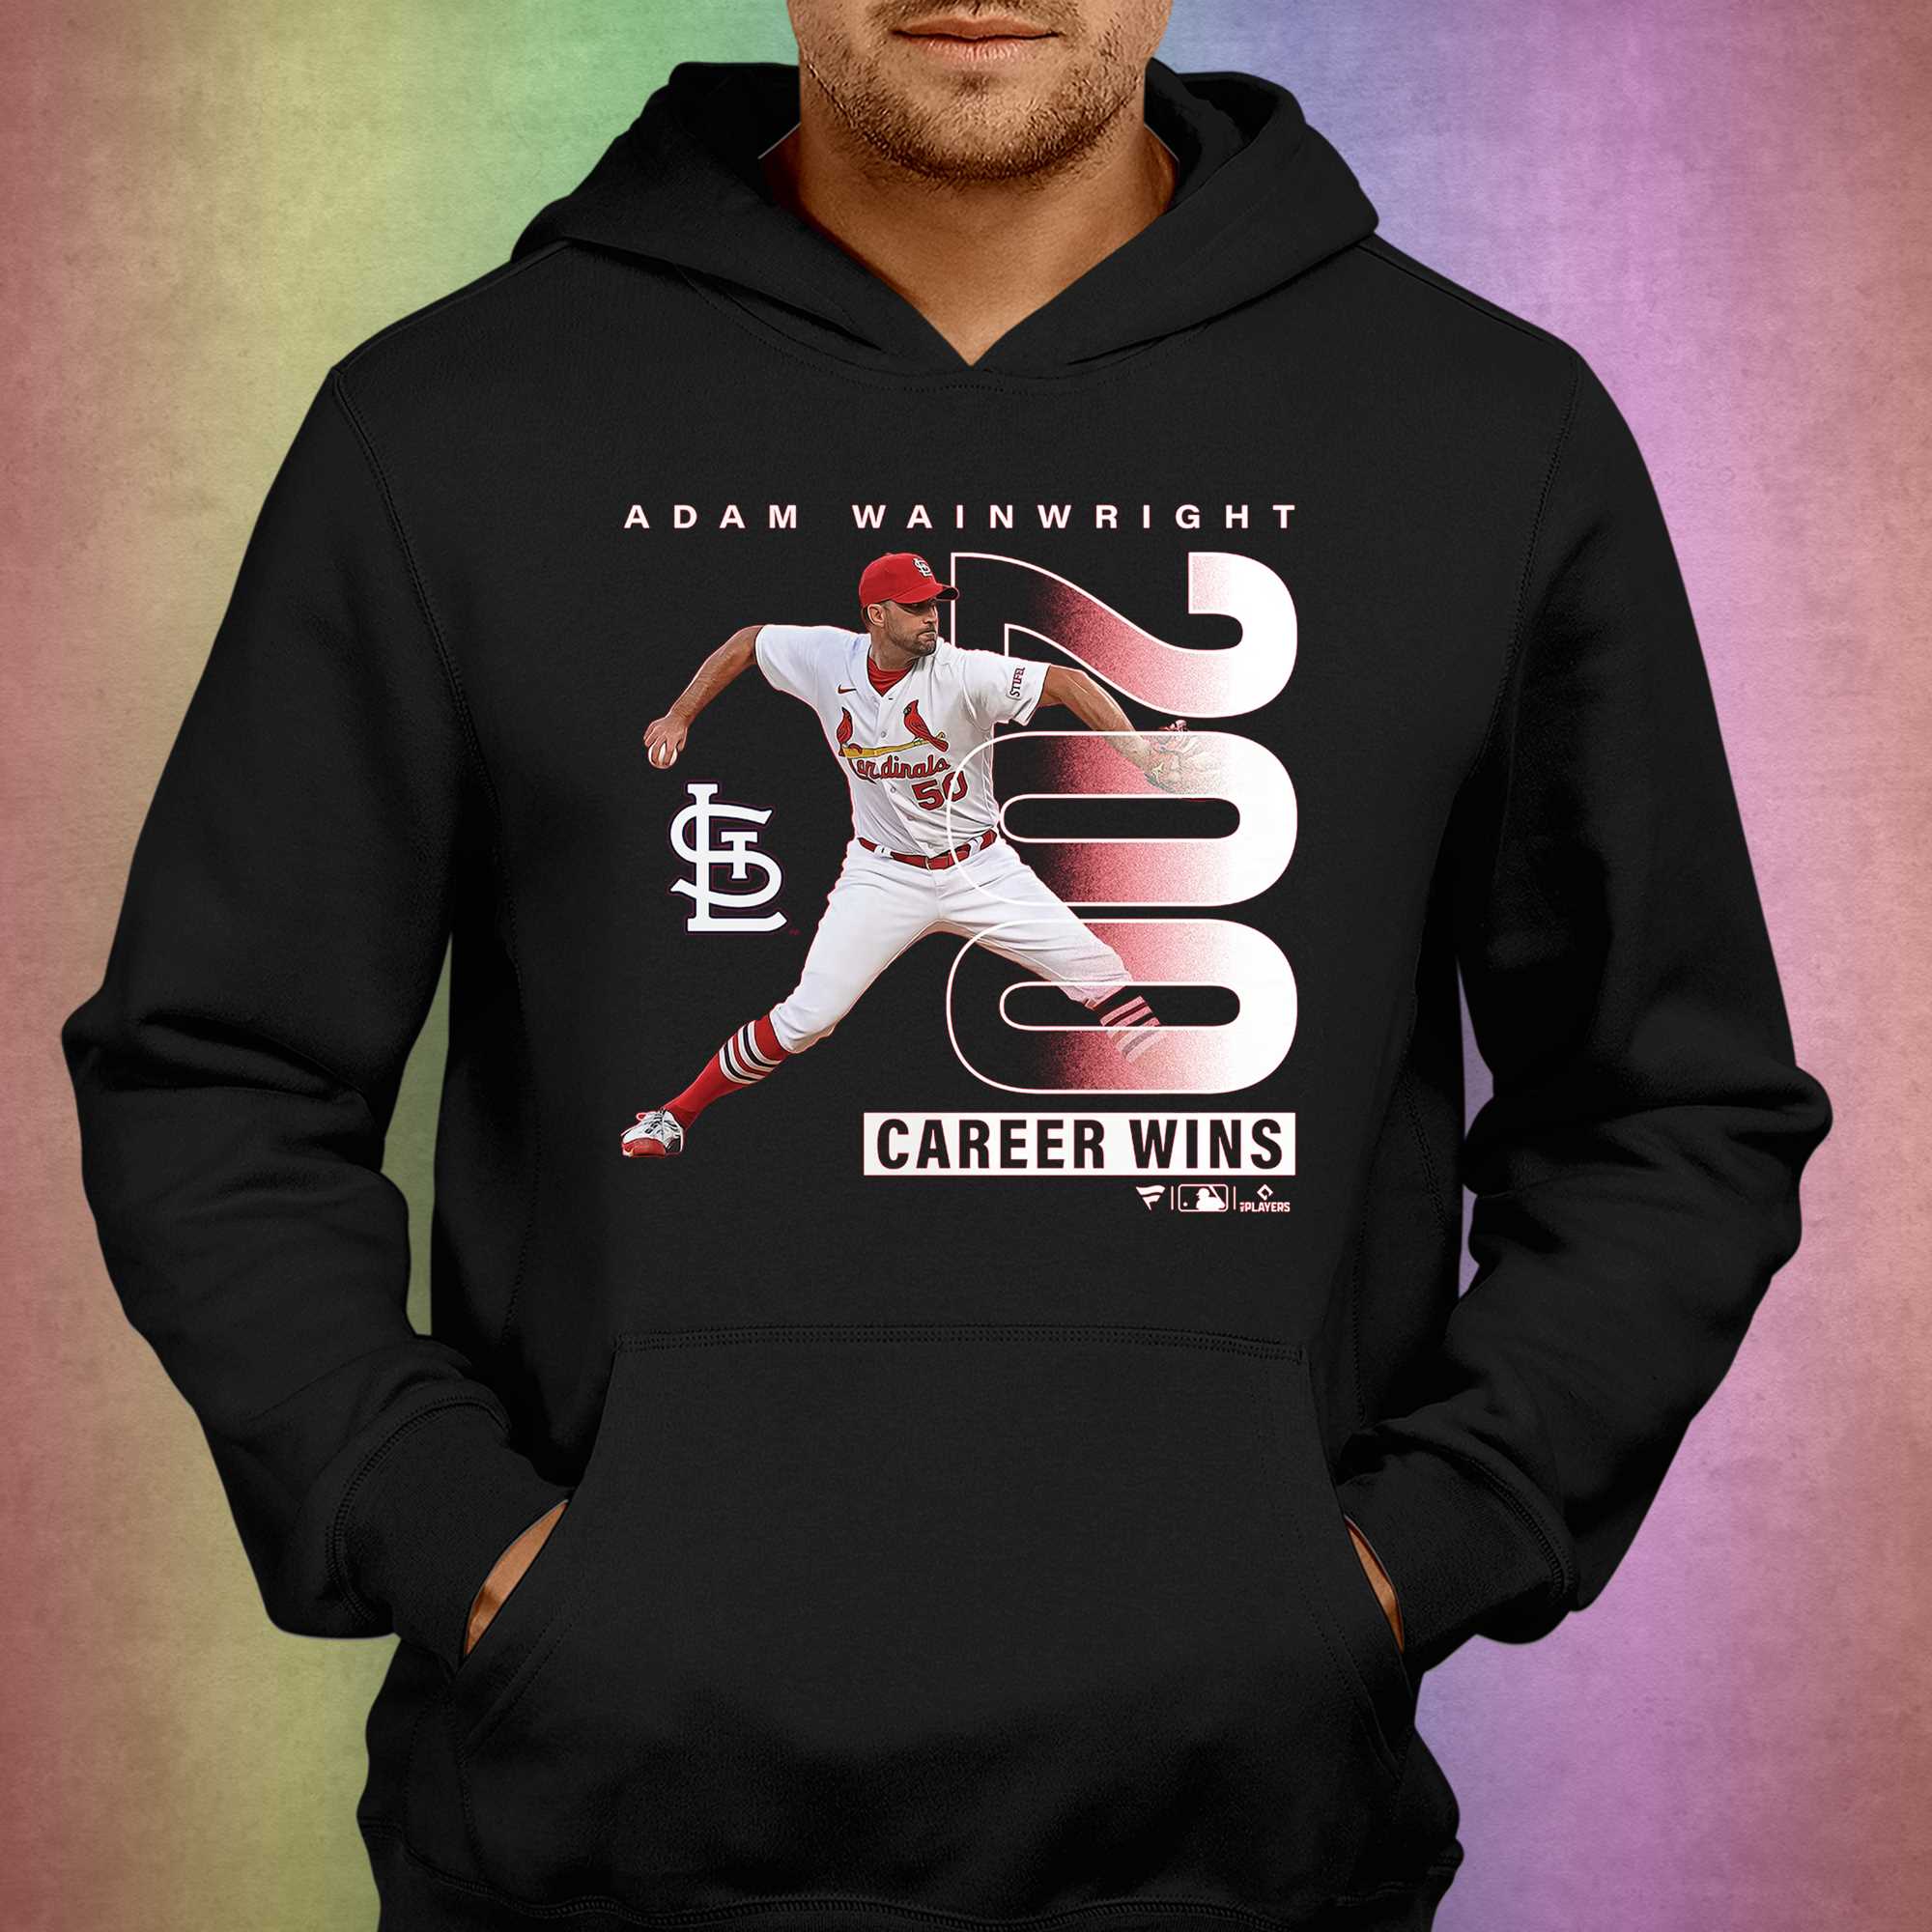 St Louis Cardinals Adam Wainwright 200 Career Wins In Mlb Shirt -  Reallgraphics